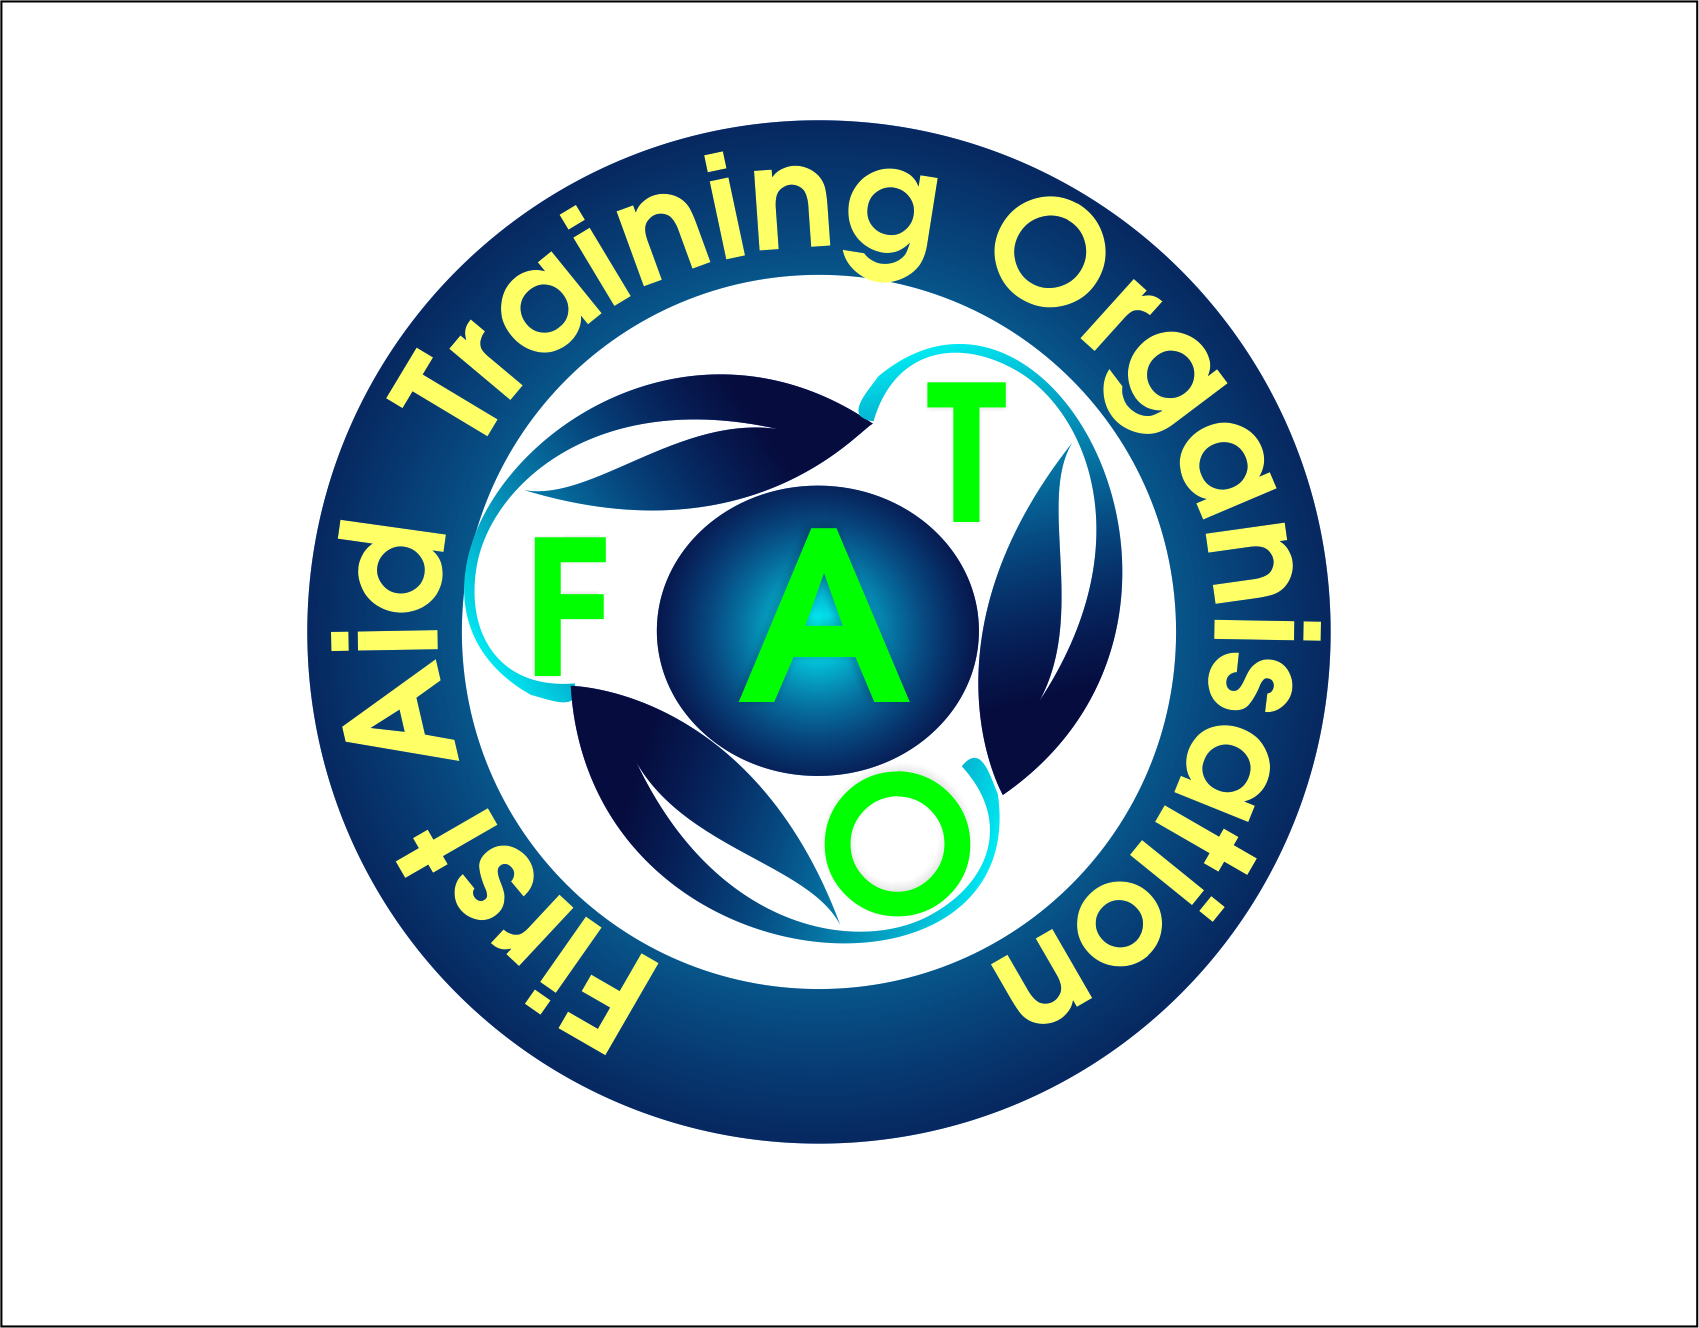 First Aid Training Organisation